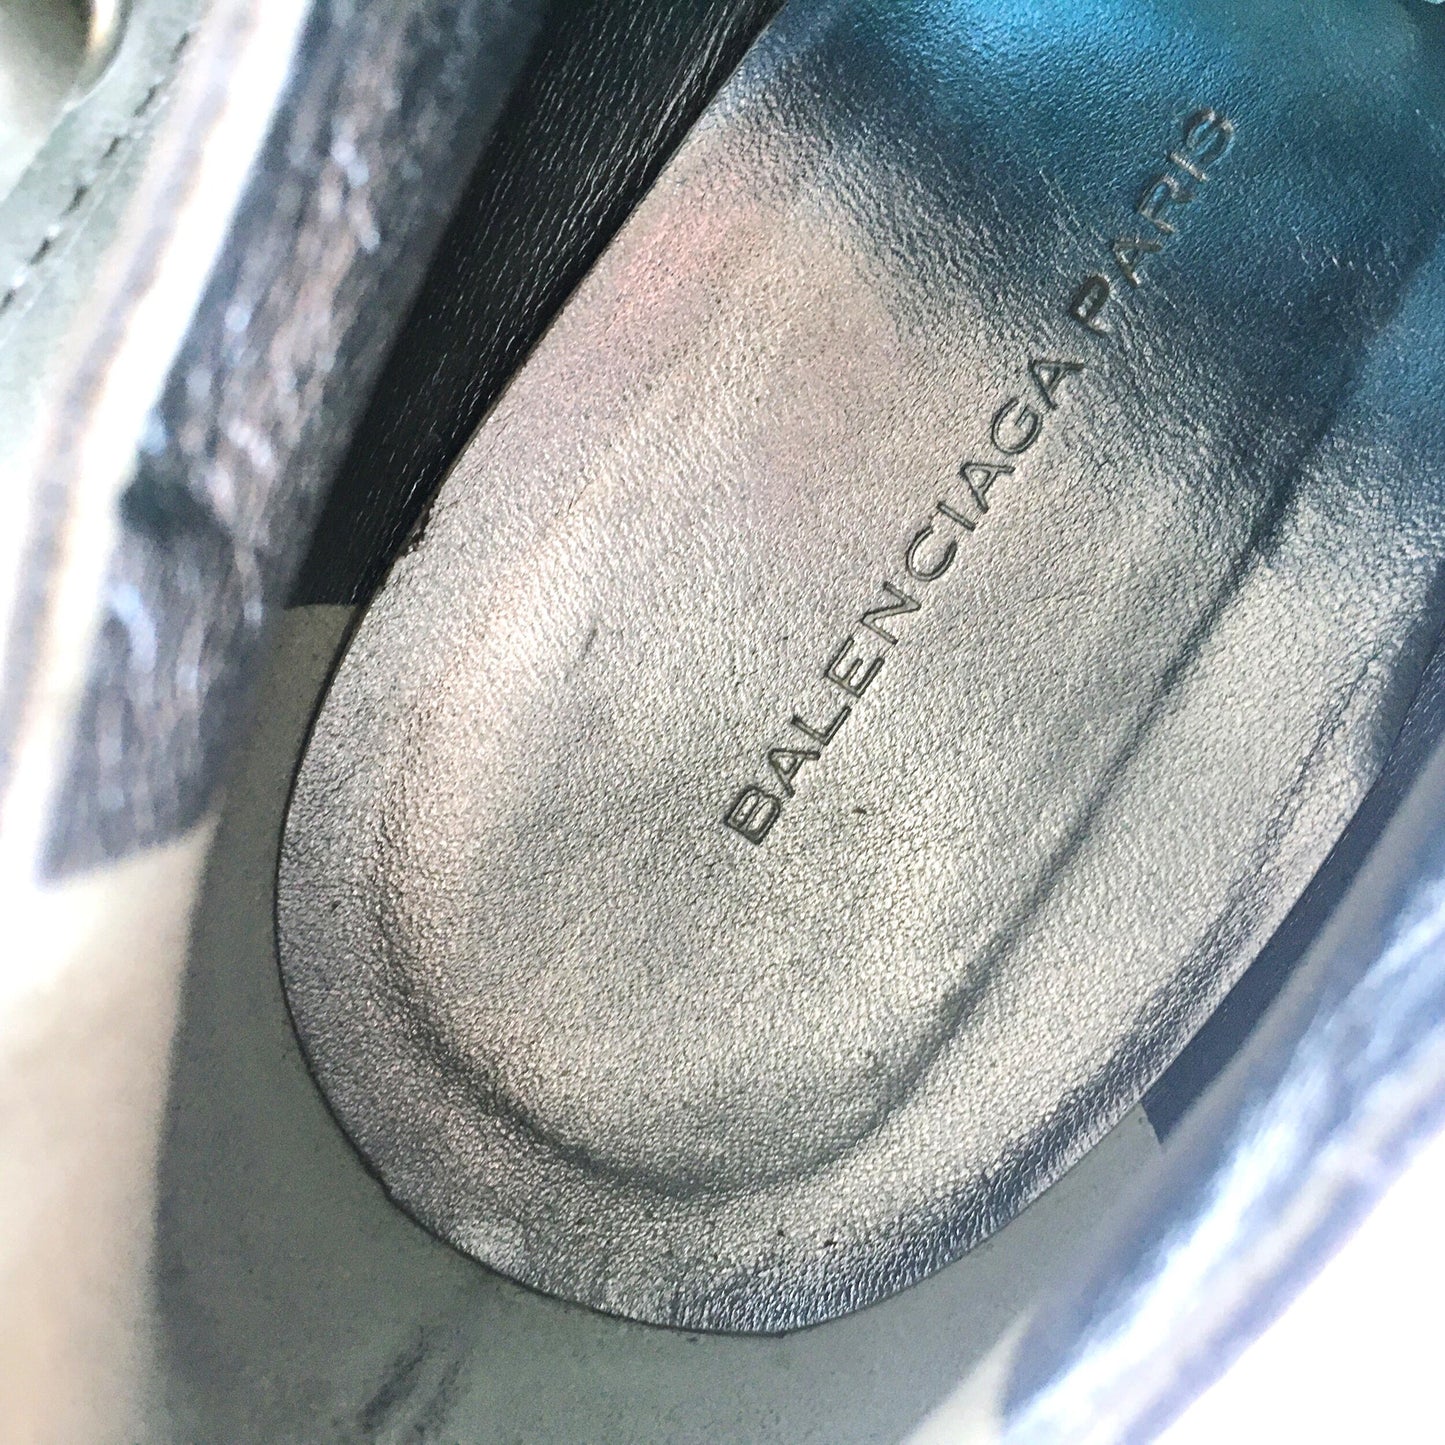 Balenciaga Paris leather loafer wedge - size 37